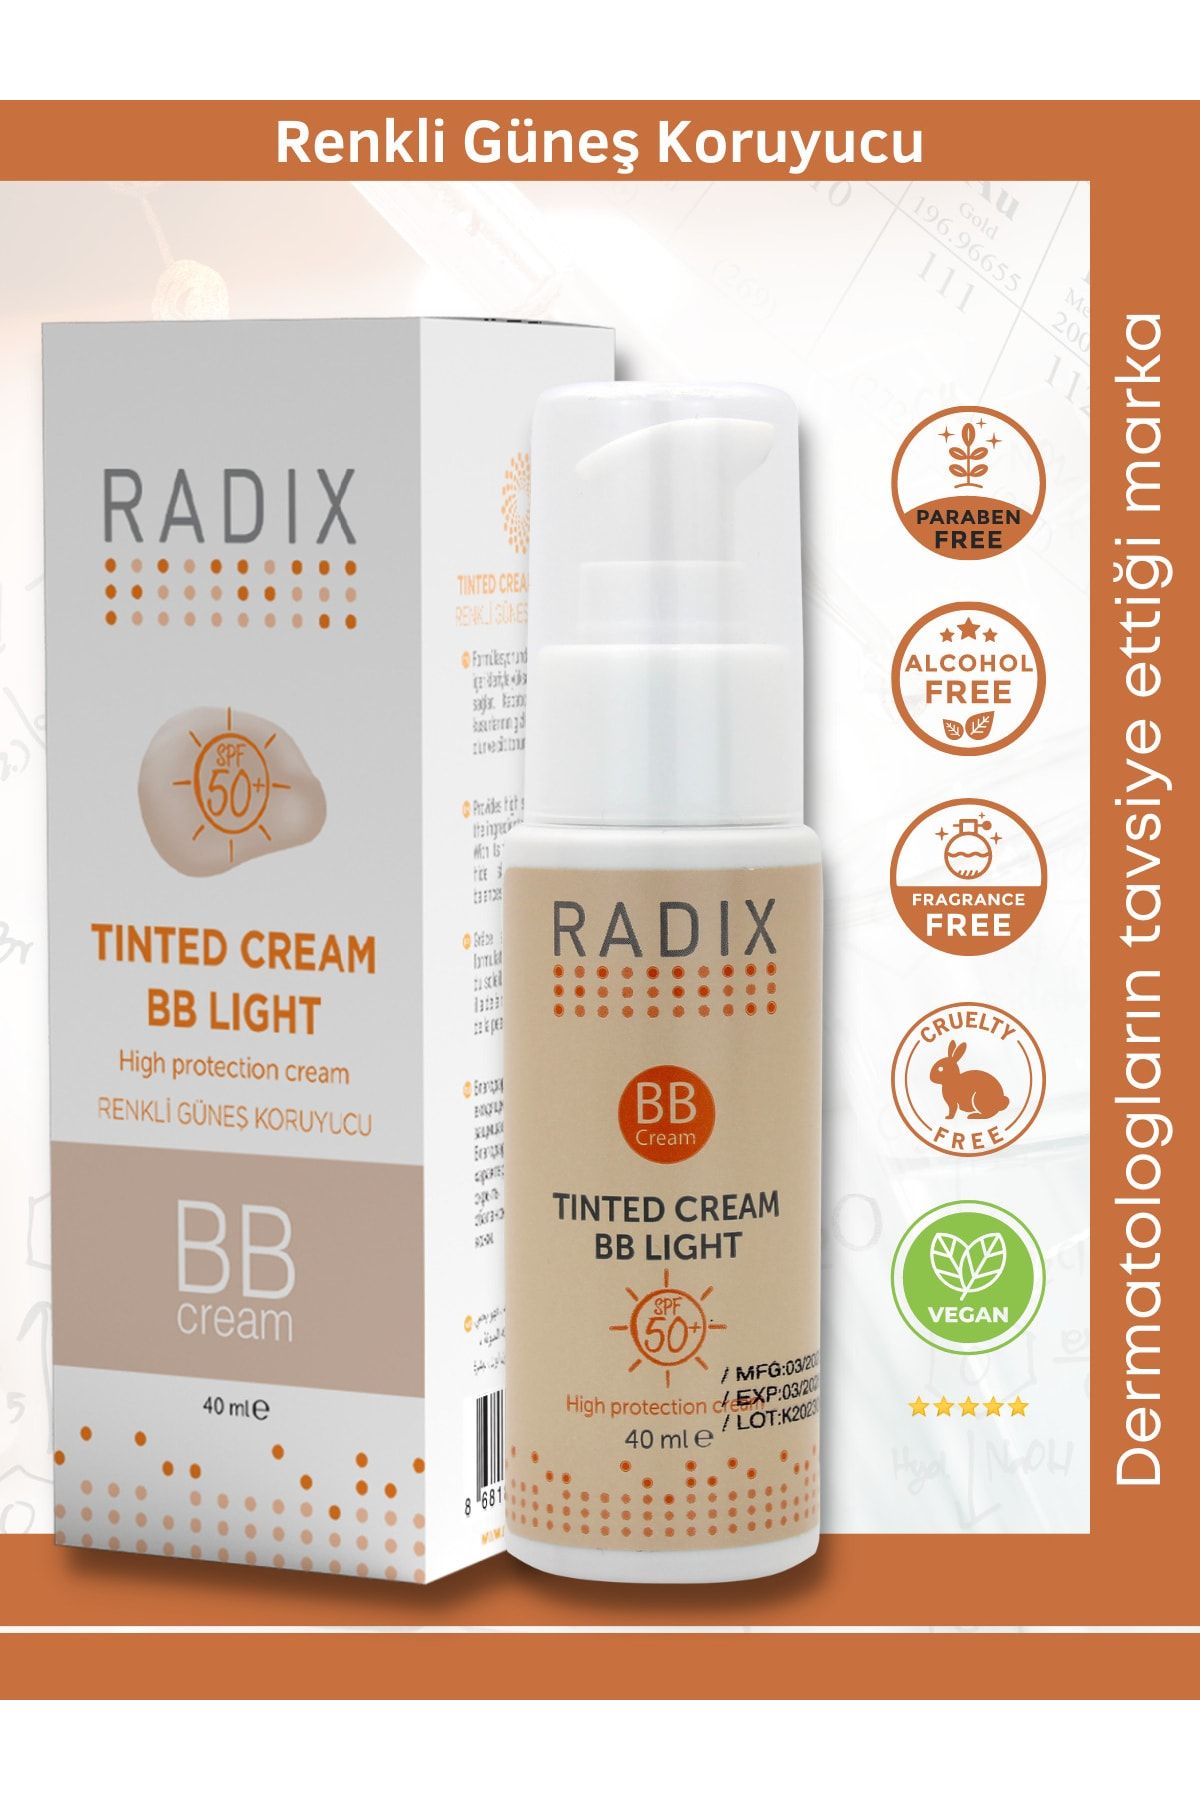 Radix Renkli Güneş Kremi - Tinted Cream Bb Light (açık-orta Ton) 50spf+ 40ml